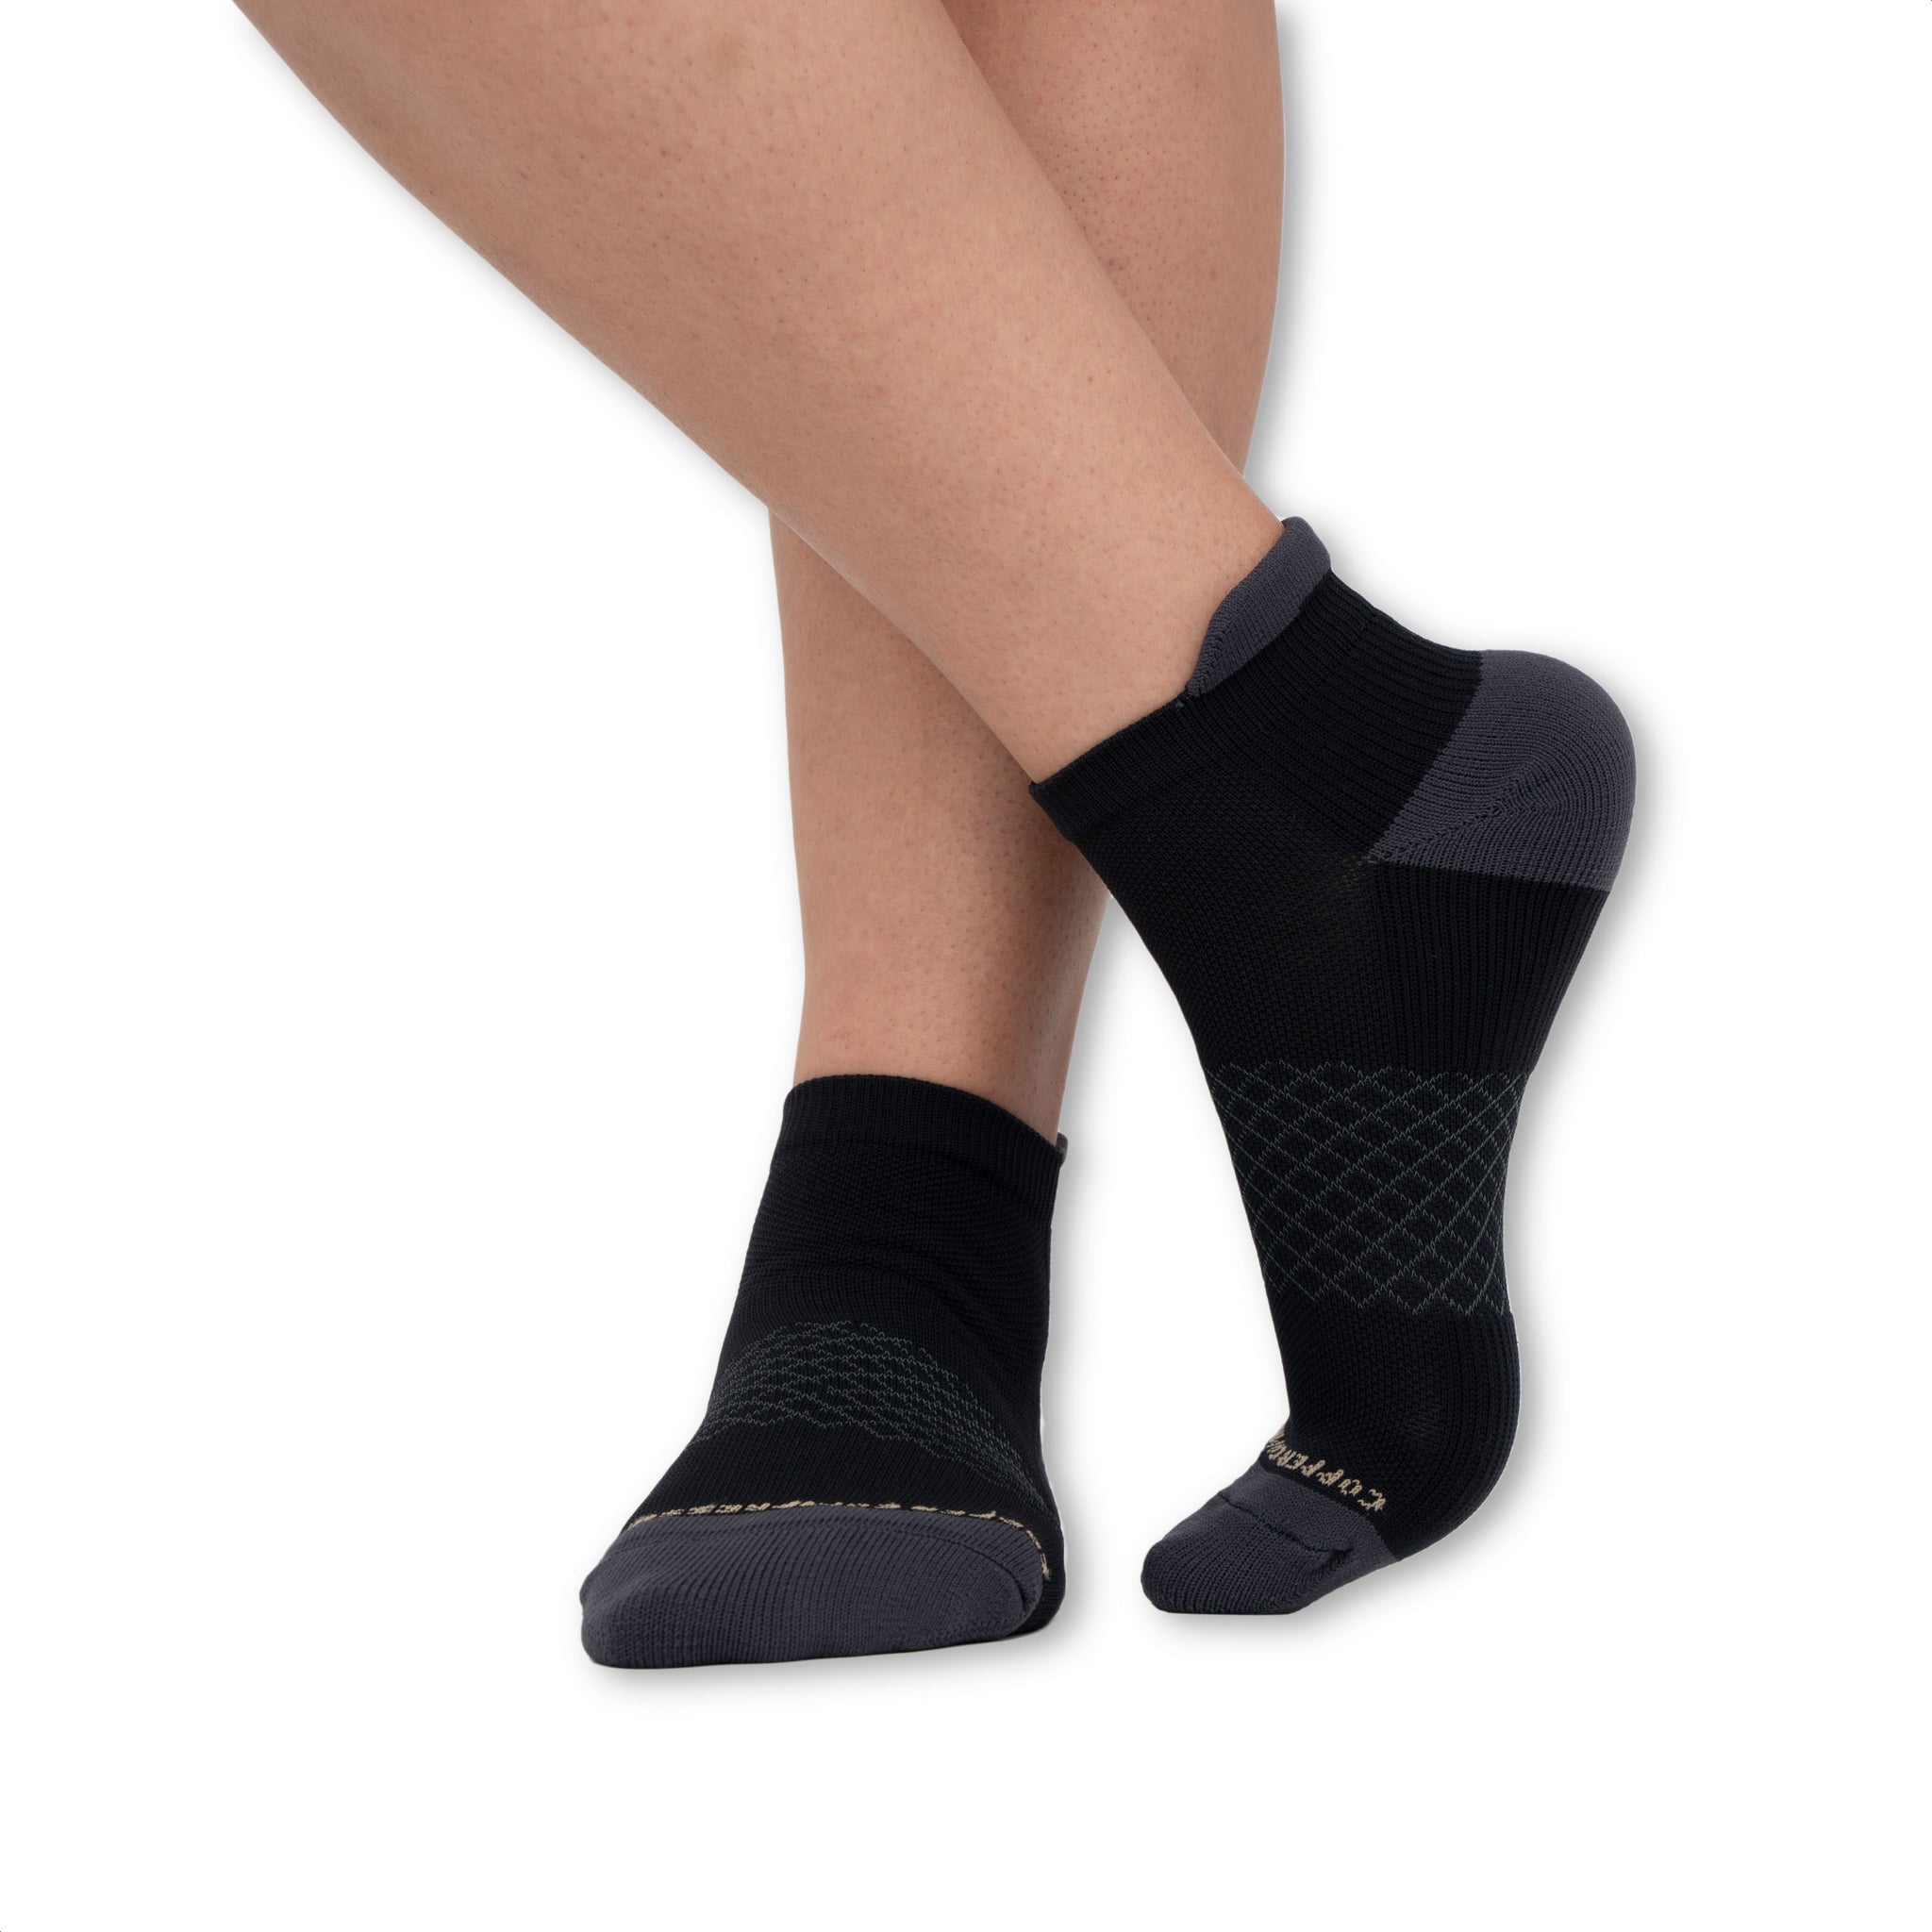 Copper Compression Powerknit Ankle Sport Socks (1 pair)